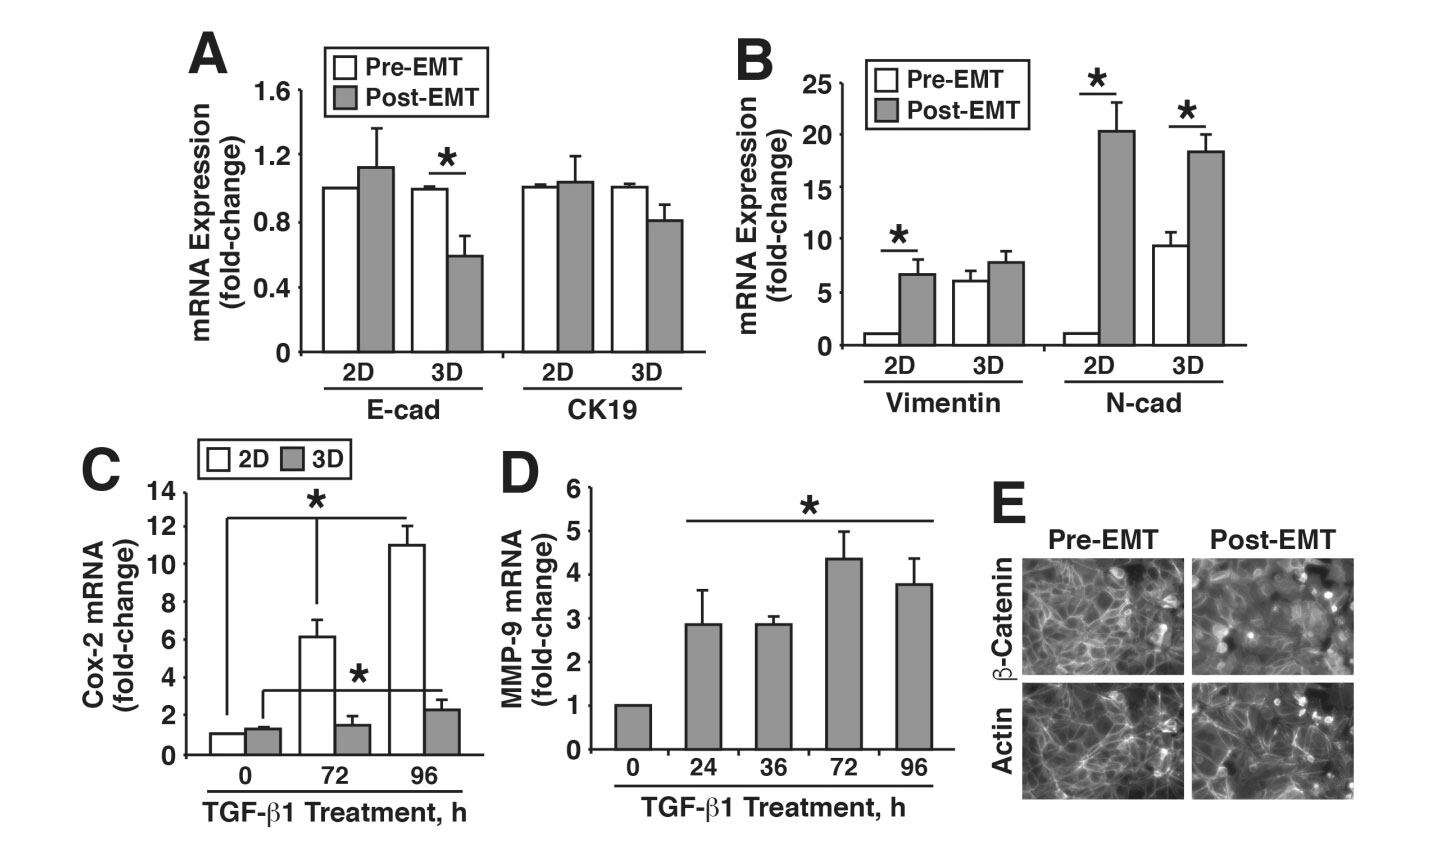 TGF-β stimulation of EMT programs elicits non-genomic ER-α activity and anti-estrogen resistance in breast cancer cells